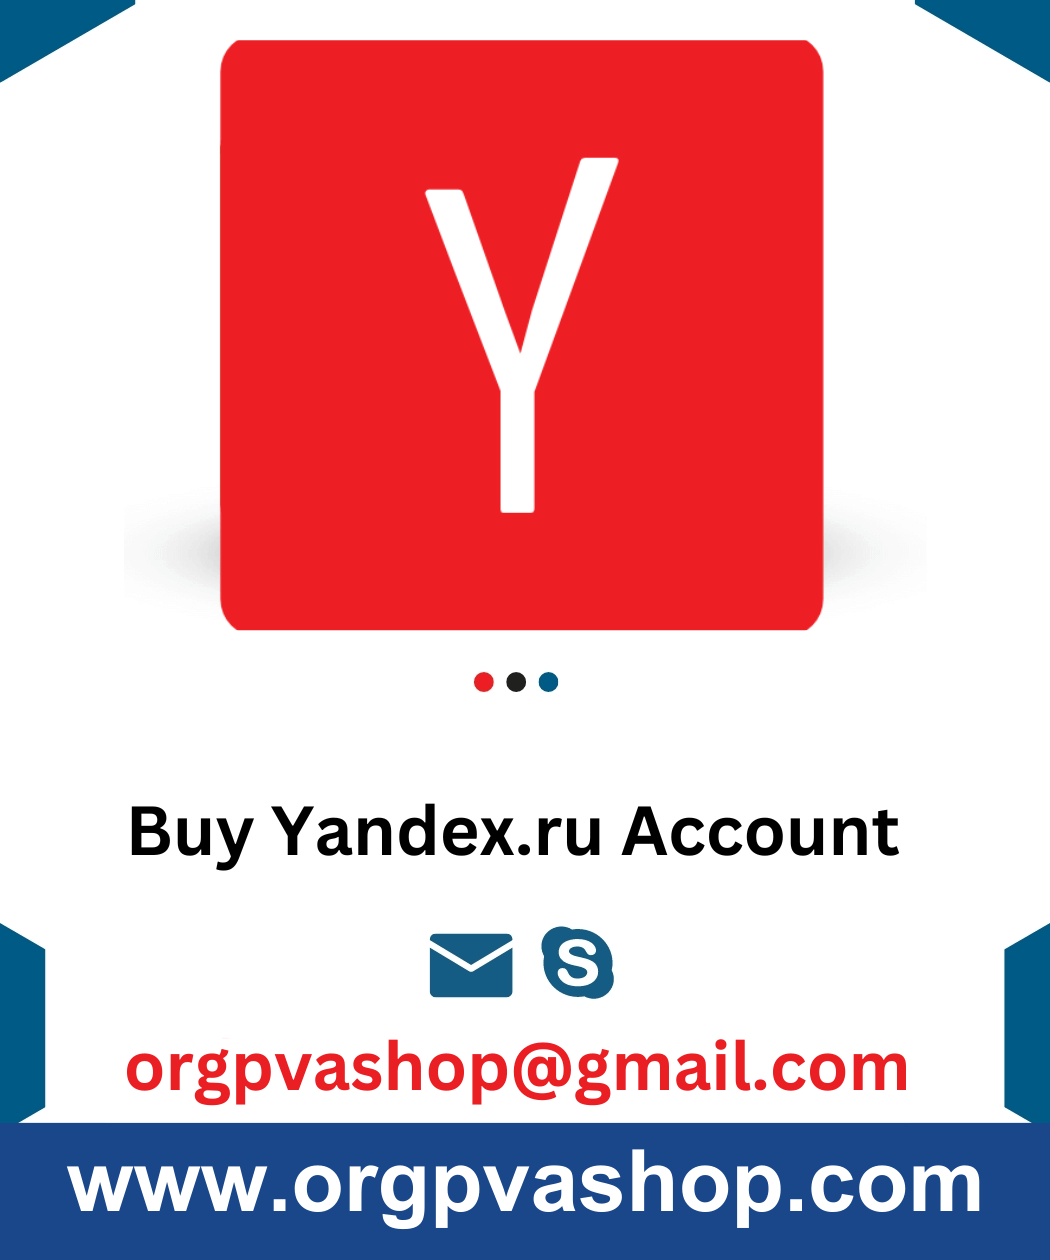 Aged Yandex.ru  accounts (1 years old)